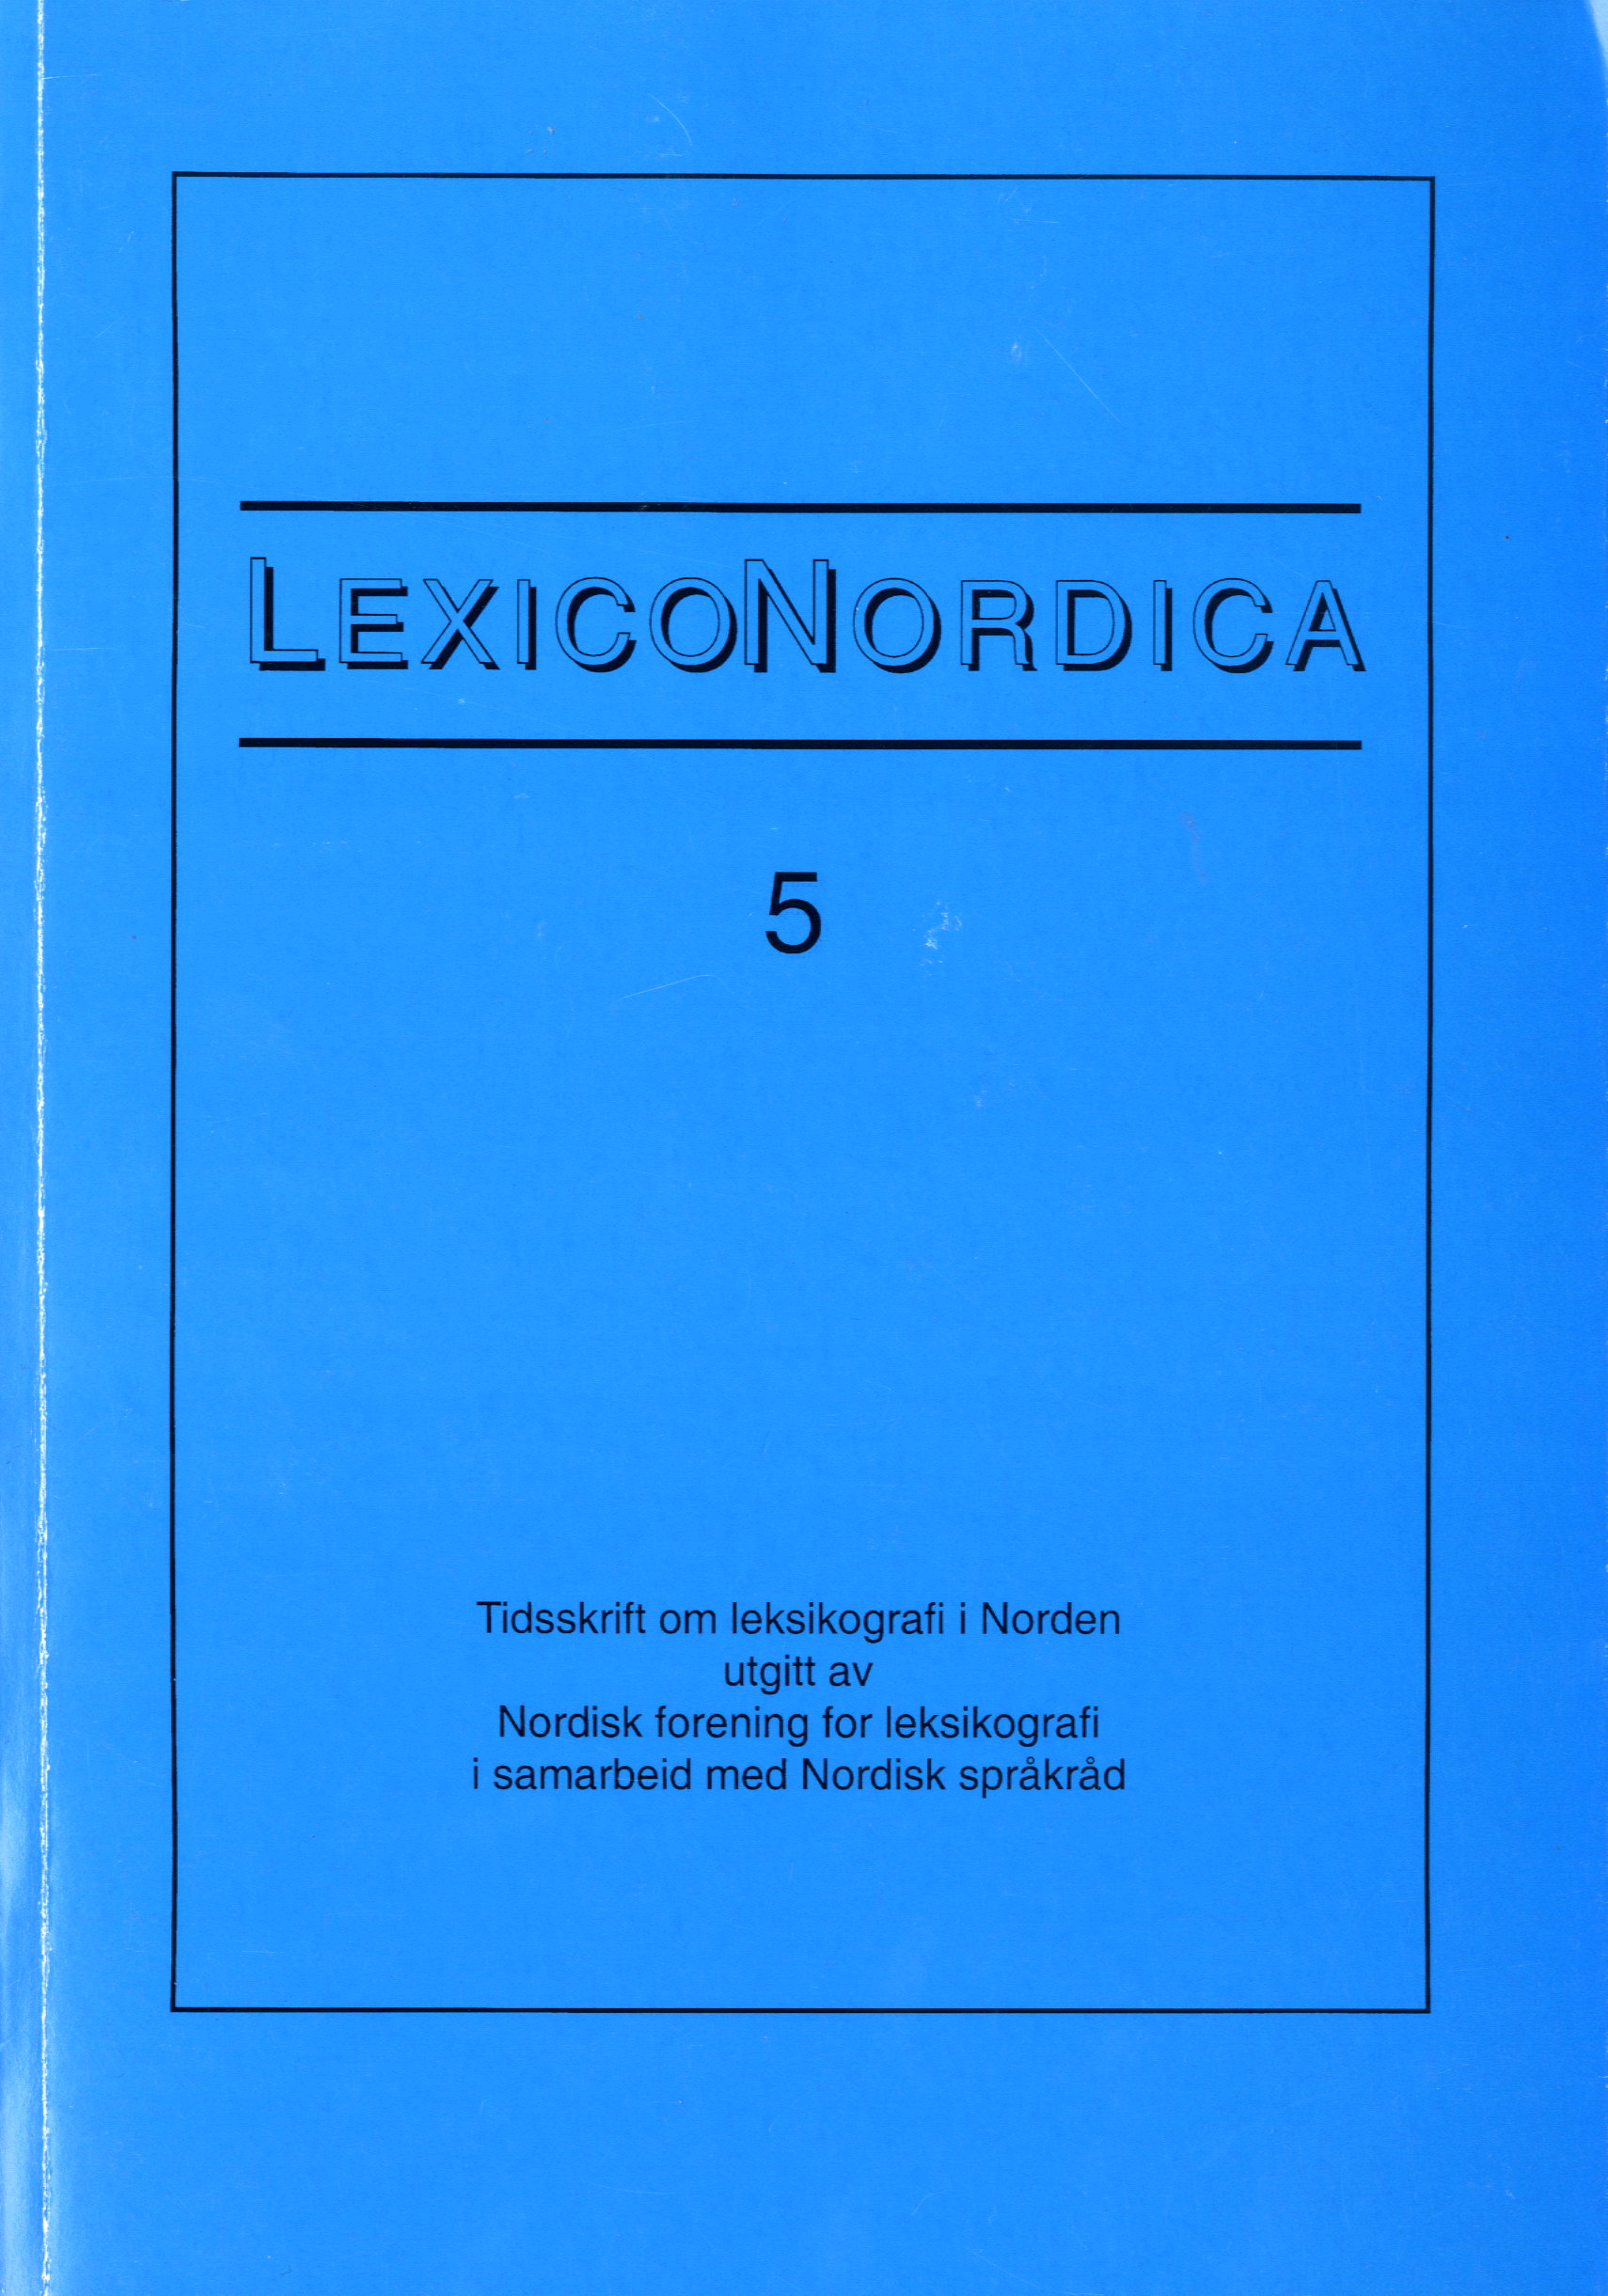 					View No. 5 (1998): Fagleksikografi
				